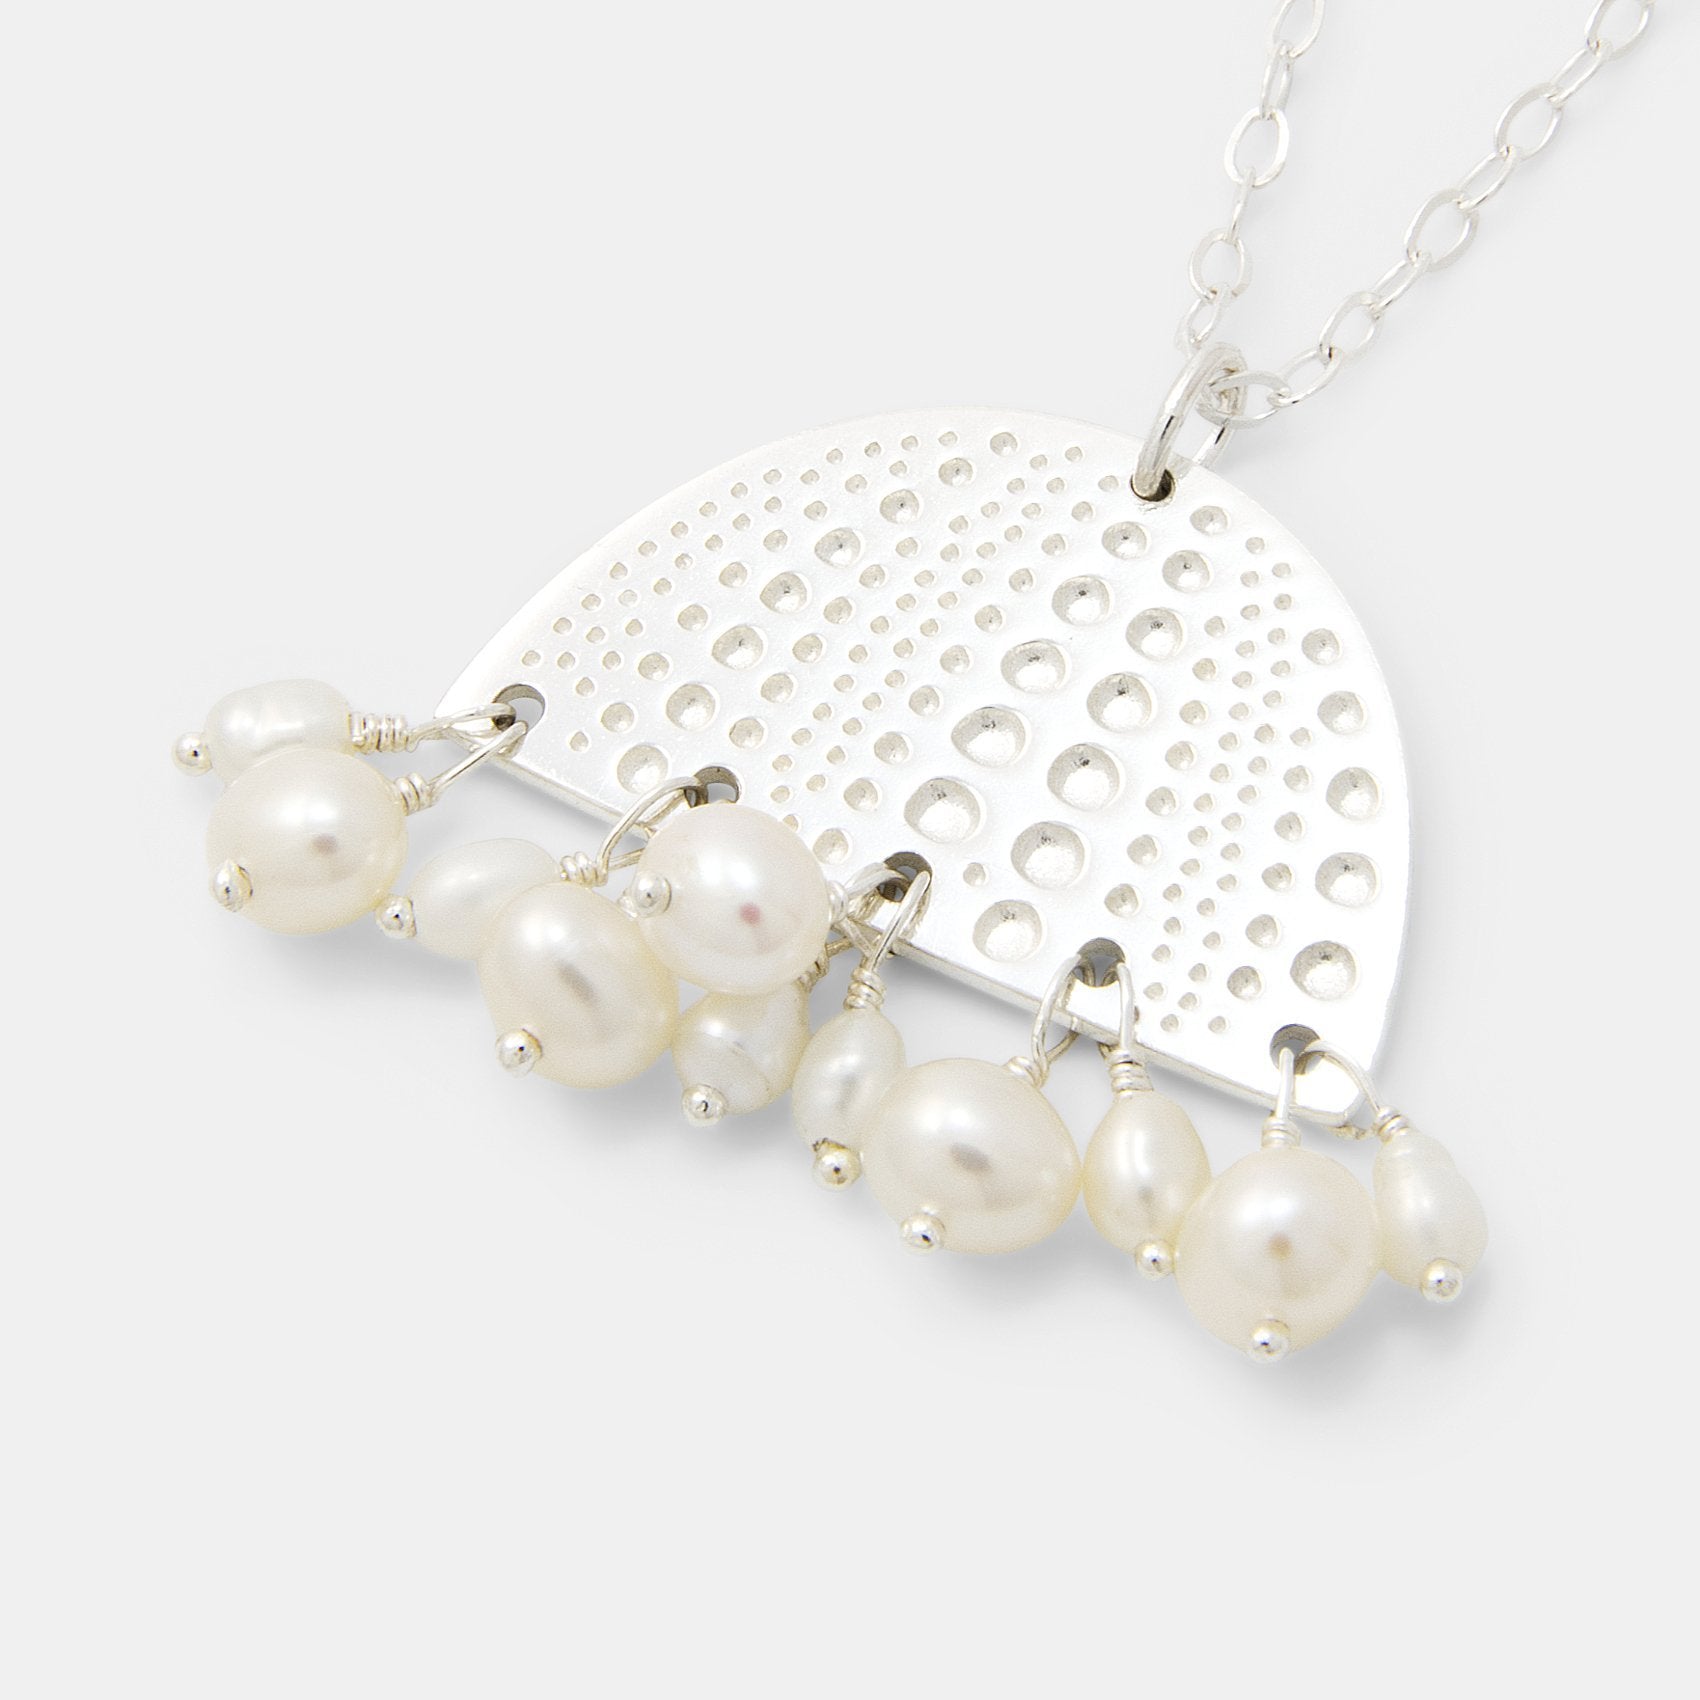 Sea urchin & pearls silver pendant necklace - Simone Walsh Jewellery Australia